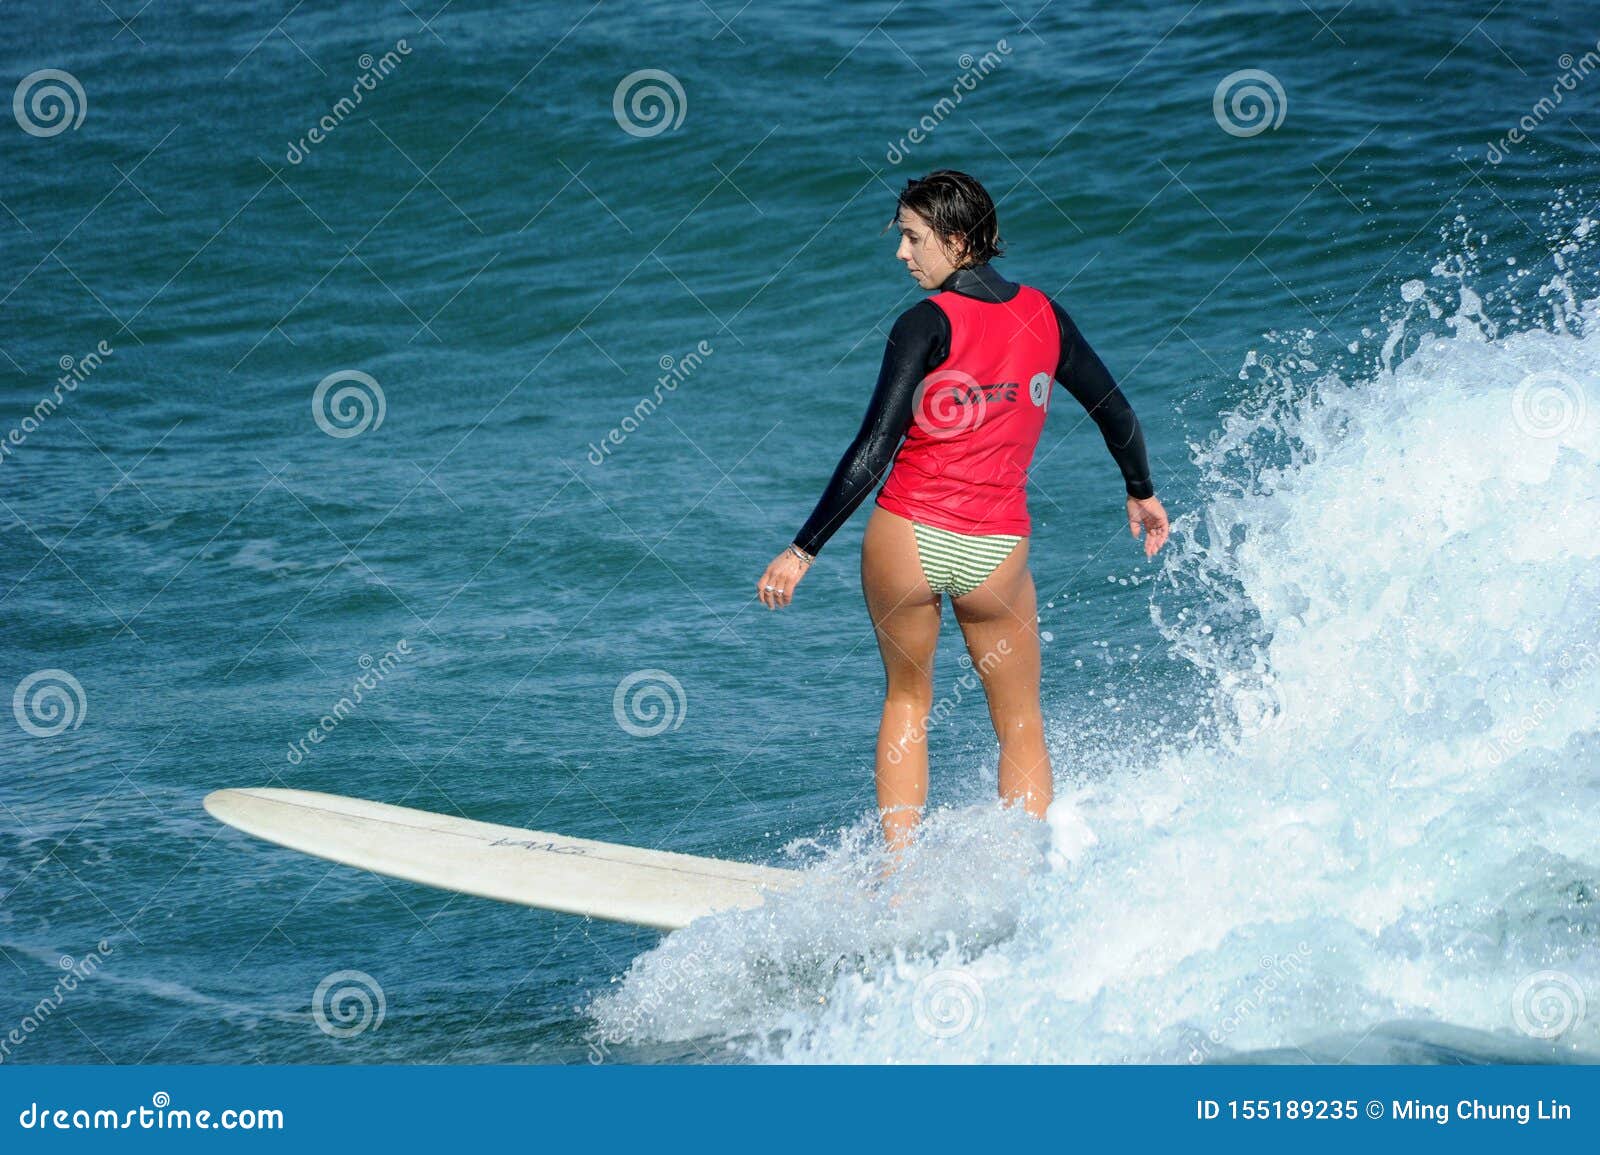 Vans US Open of Surfing, Huntington Beach, 2019 Editorial Image Image